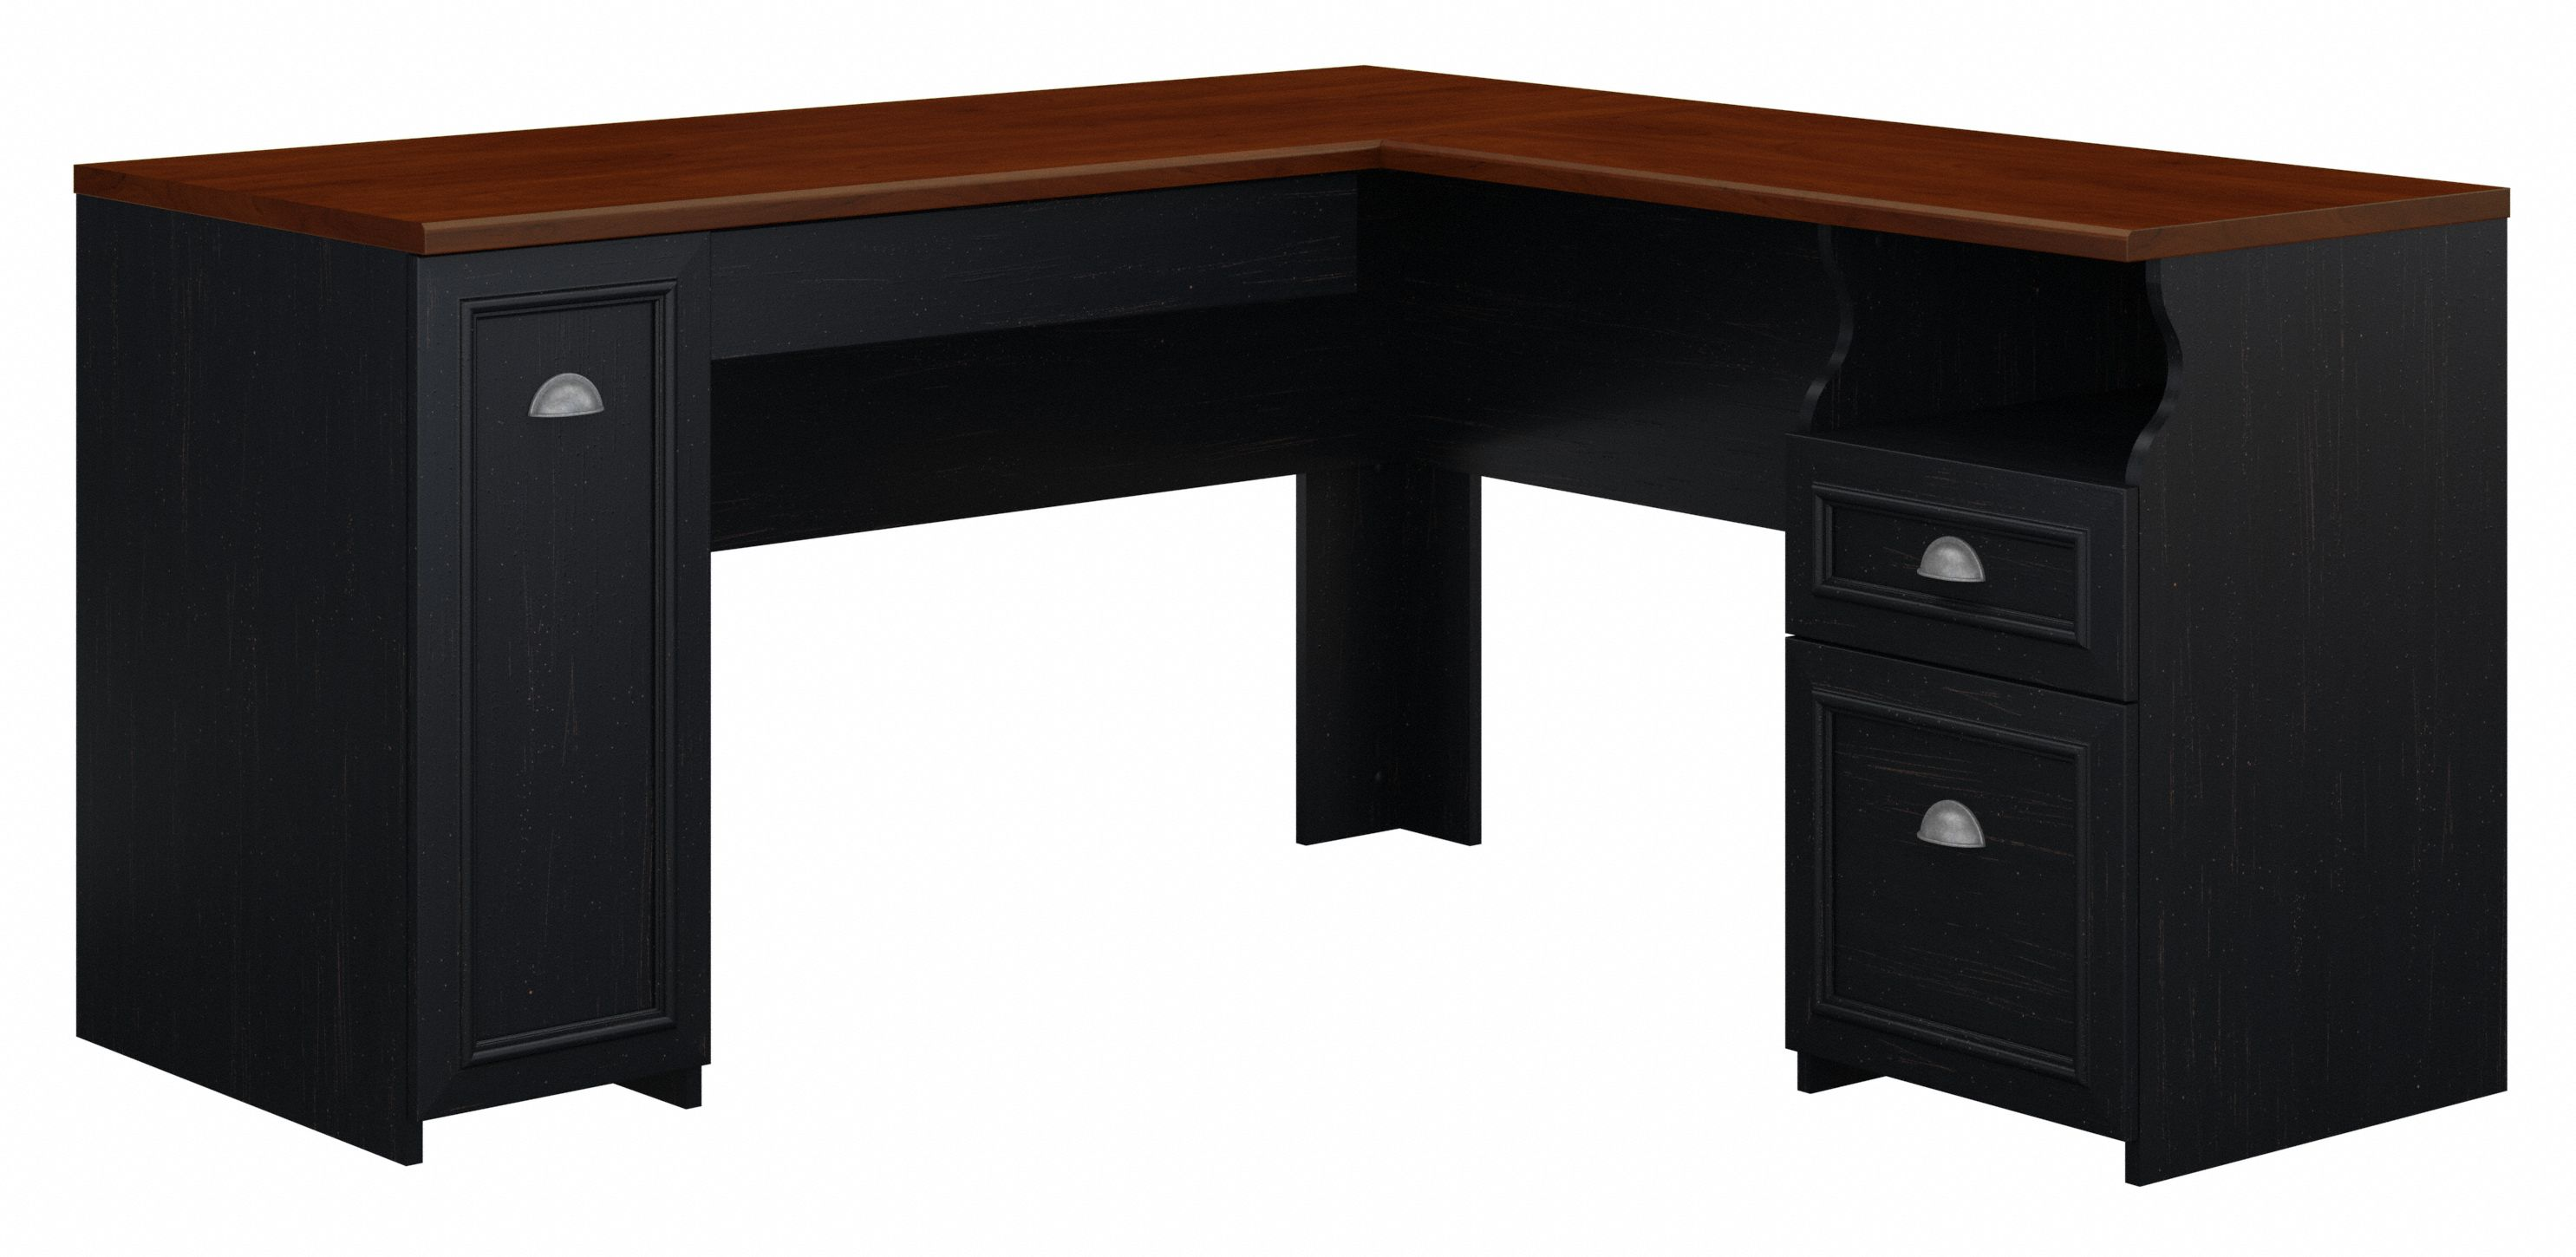 Shop Bush Furniture Fairview 60W L Shaped Desk with Drawers and Storage Cabinet 02 WC53930-03K #color_antique black/hansen cherry